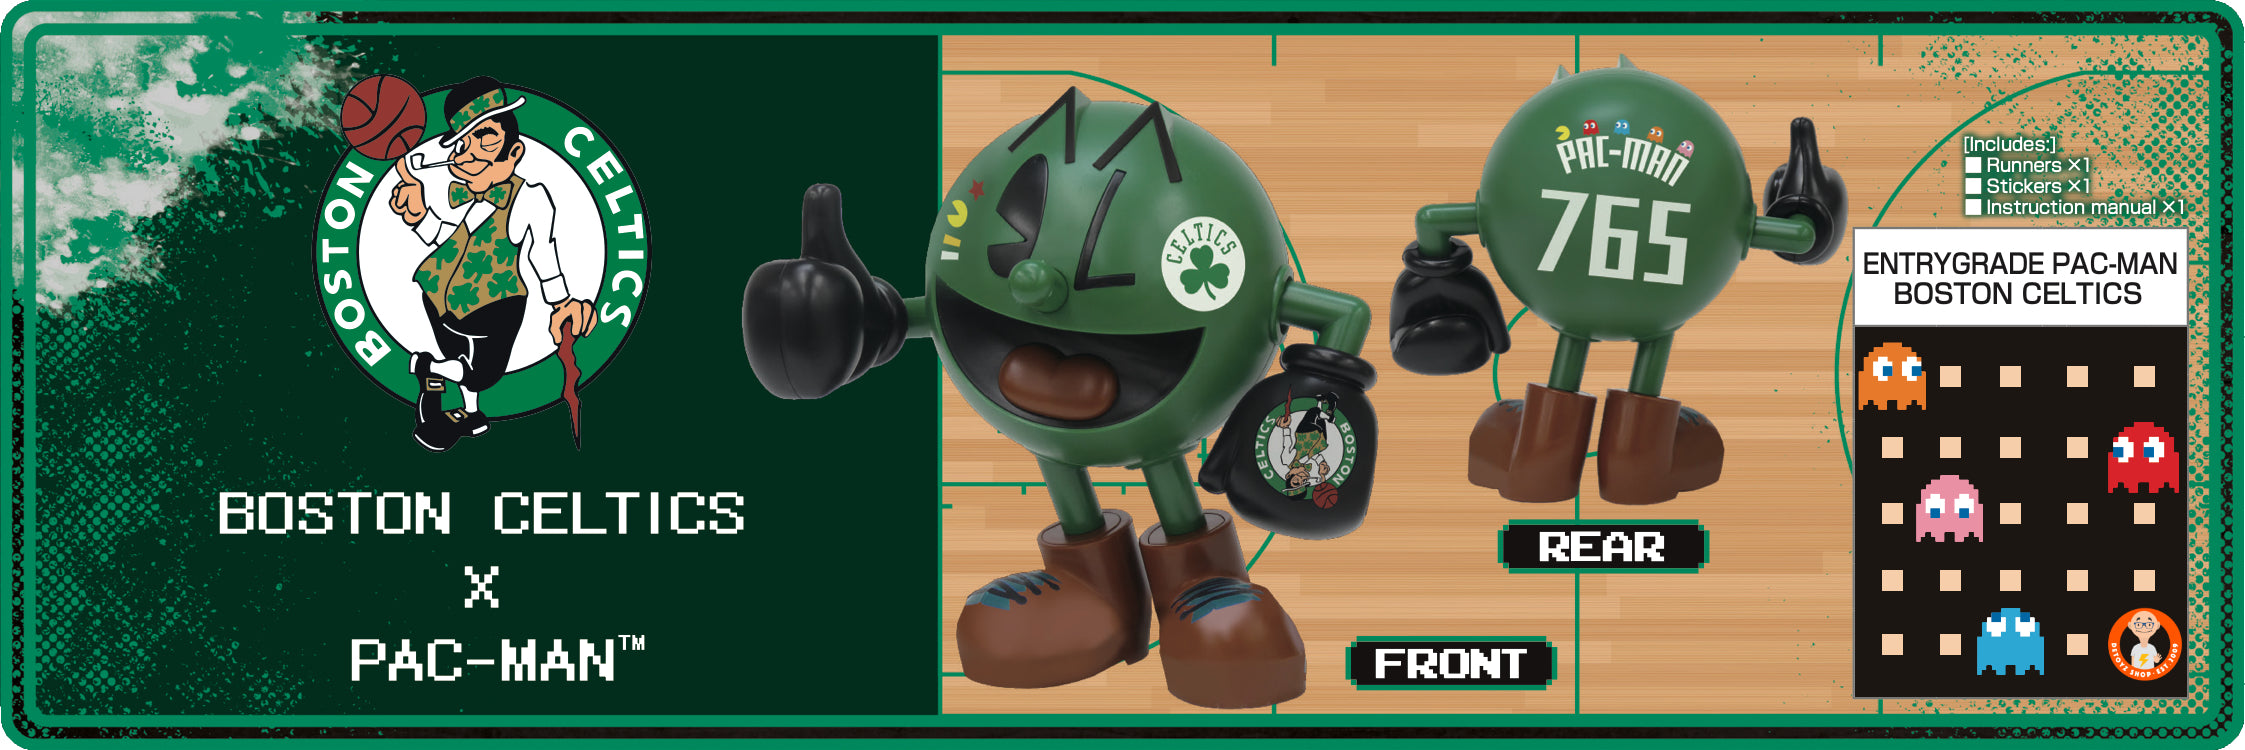 Entry Grade PAC-MAN Boston Celtics